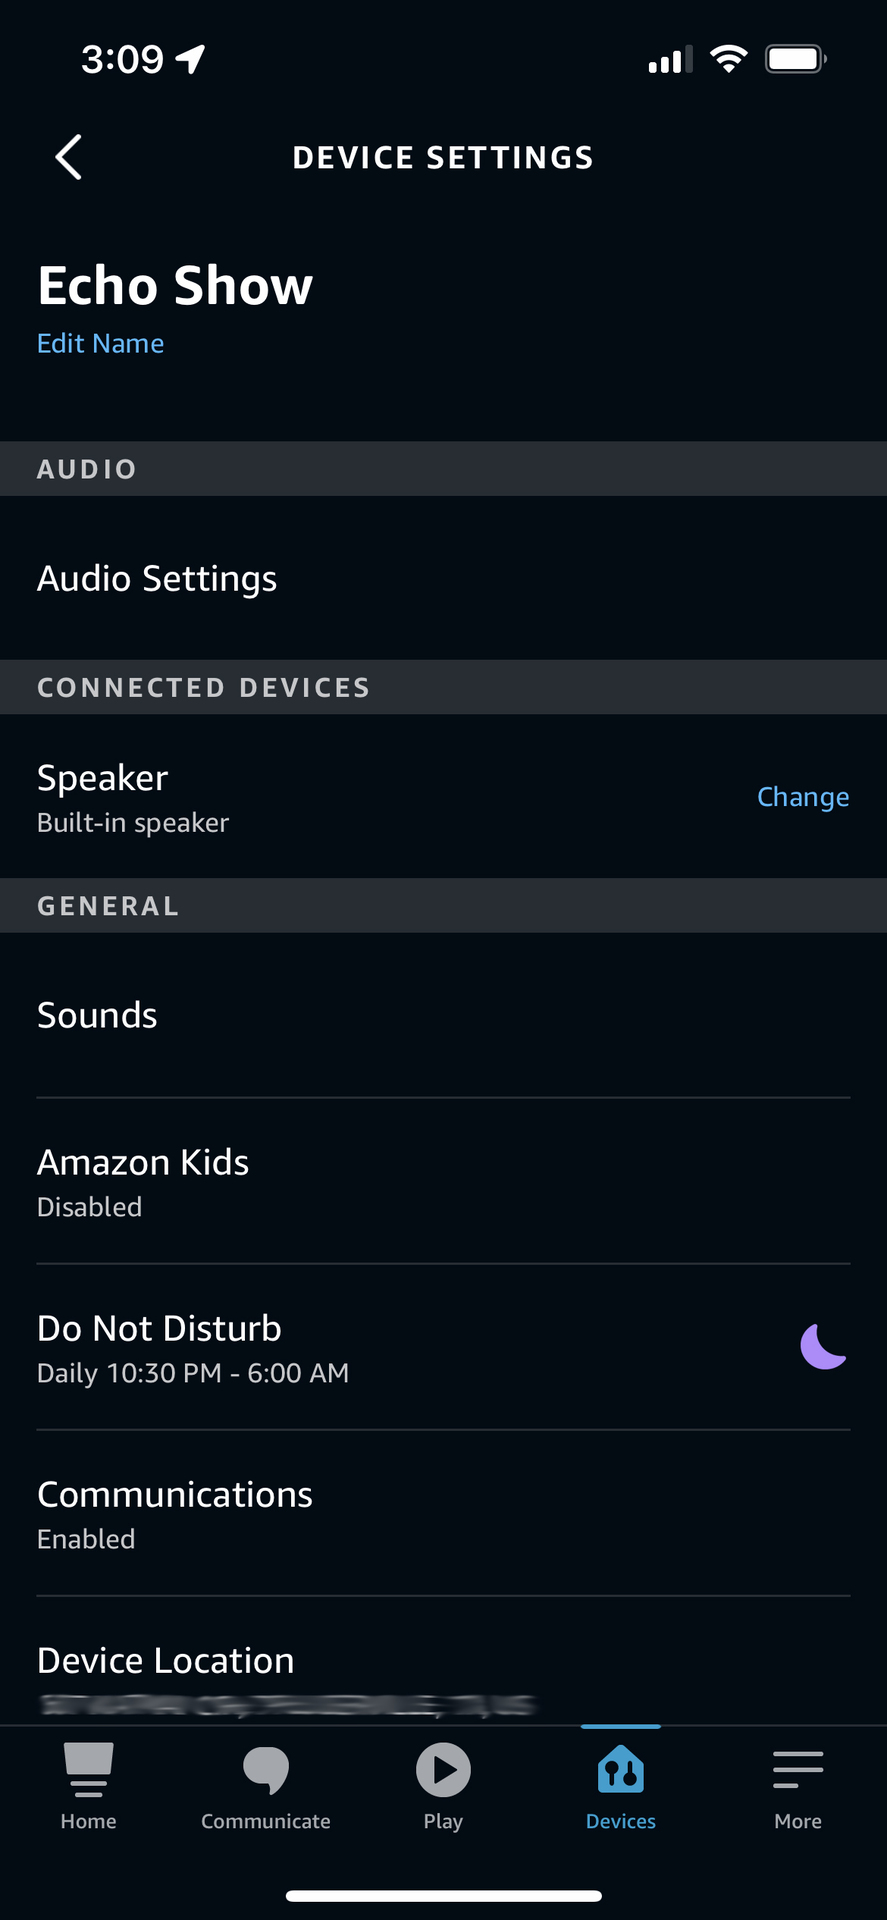 Device settings in the Alexa app